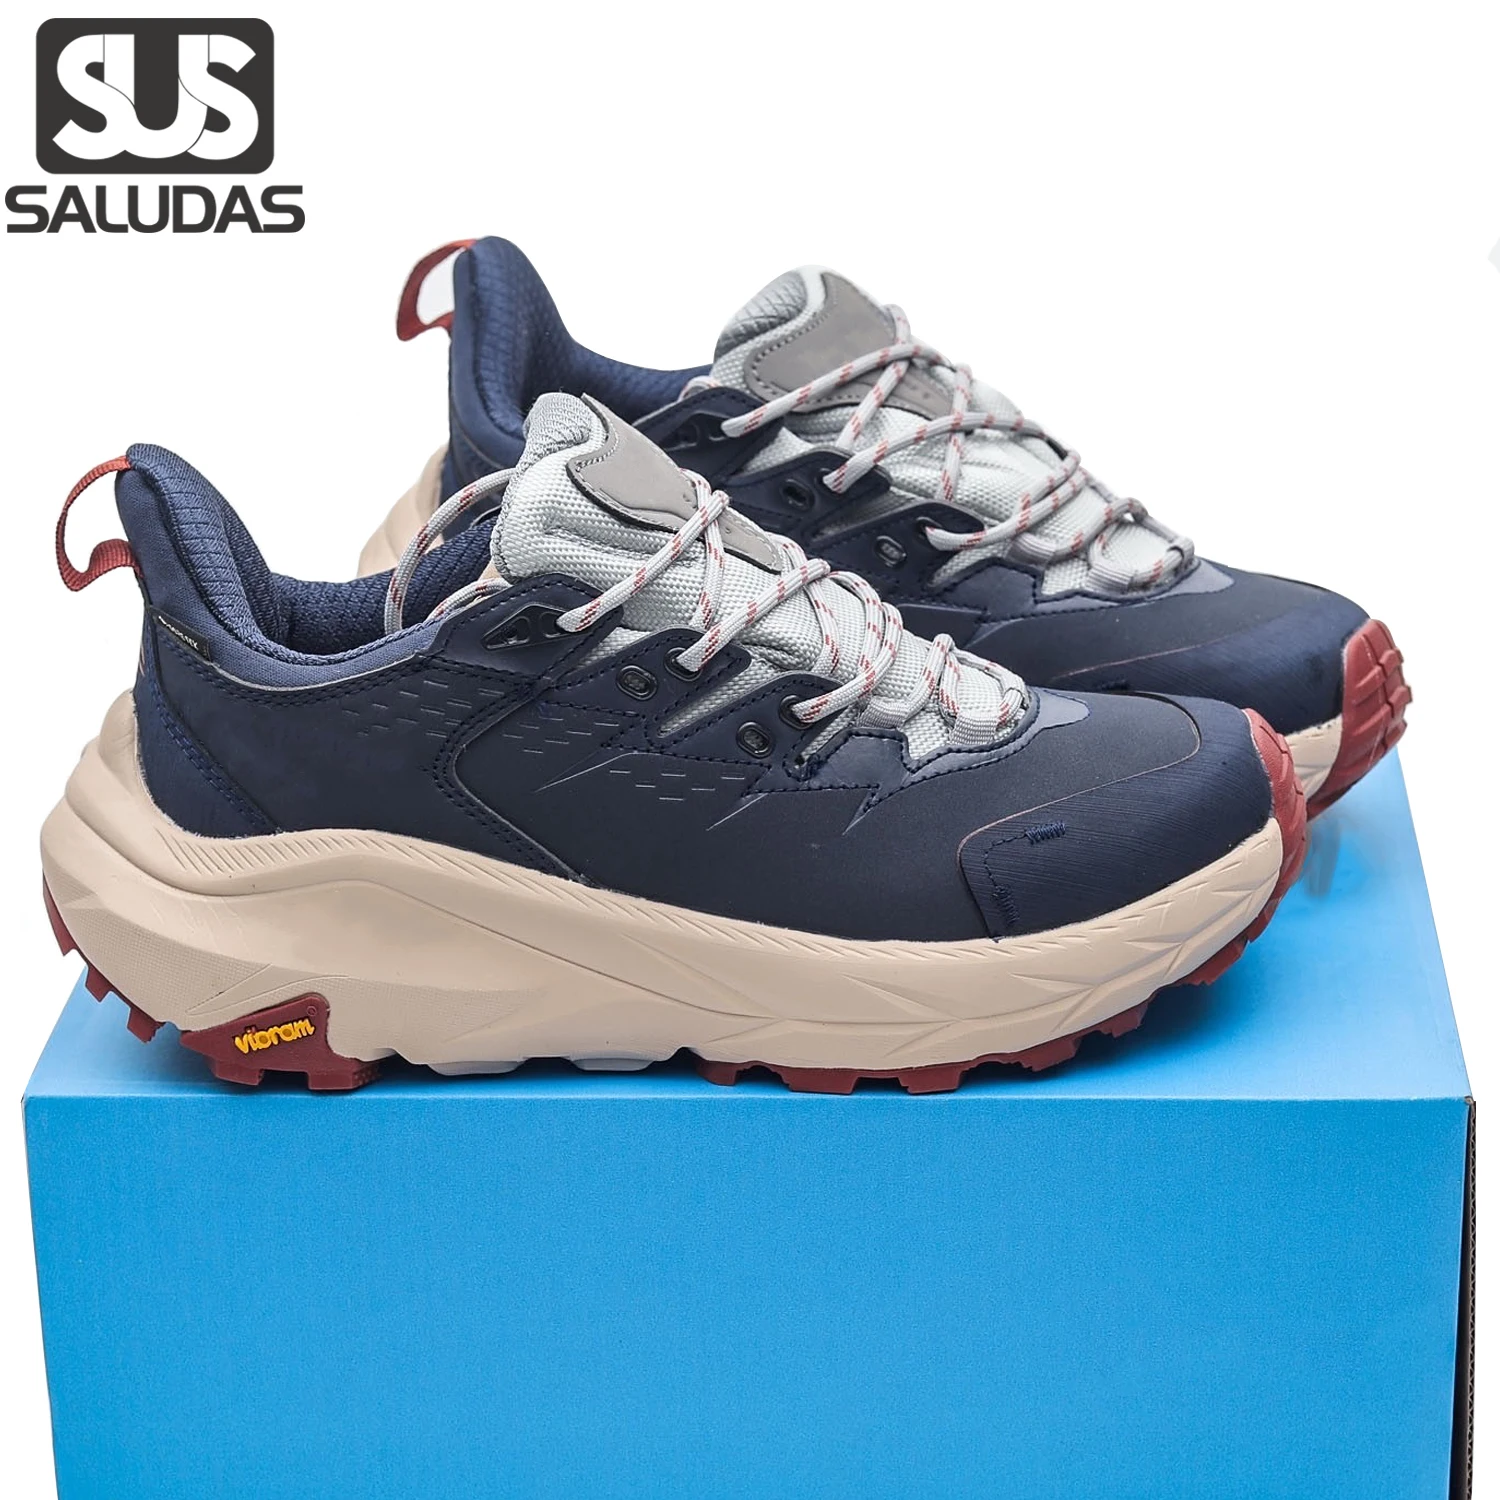 

SALUDAS Brand KAHA 2 GTX Low Top Male Hiking Shoes Men Trail Running Shoes Outdoor Mountain Camping Waterproof Trekking Sneakers